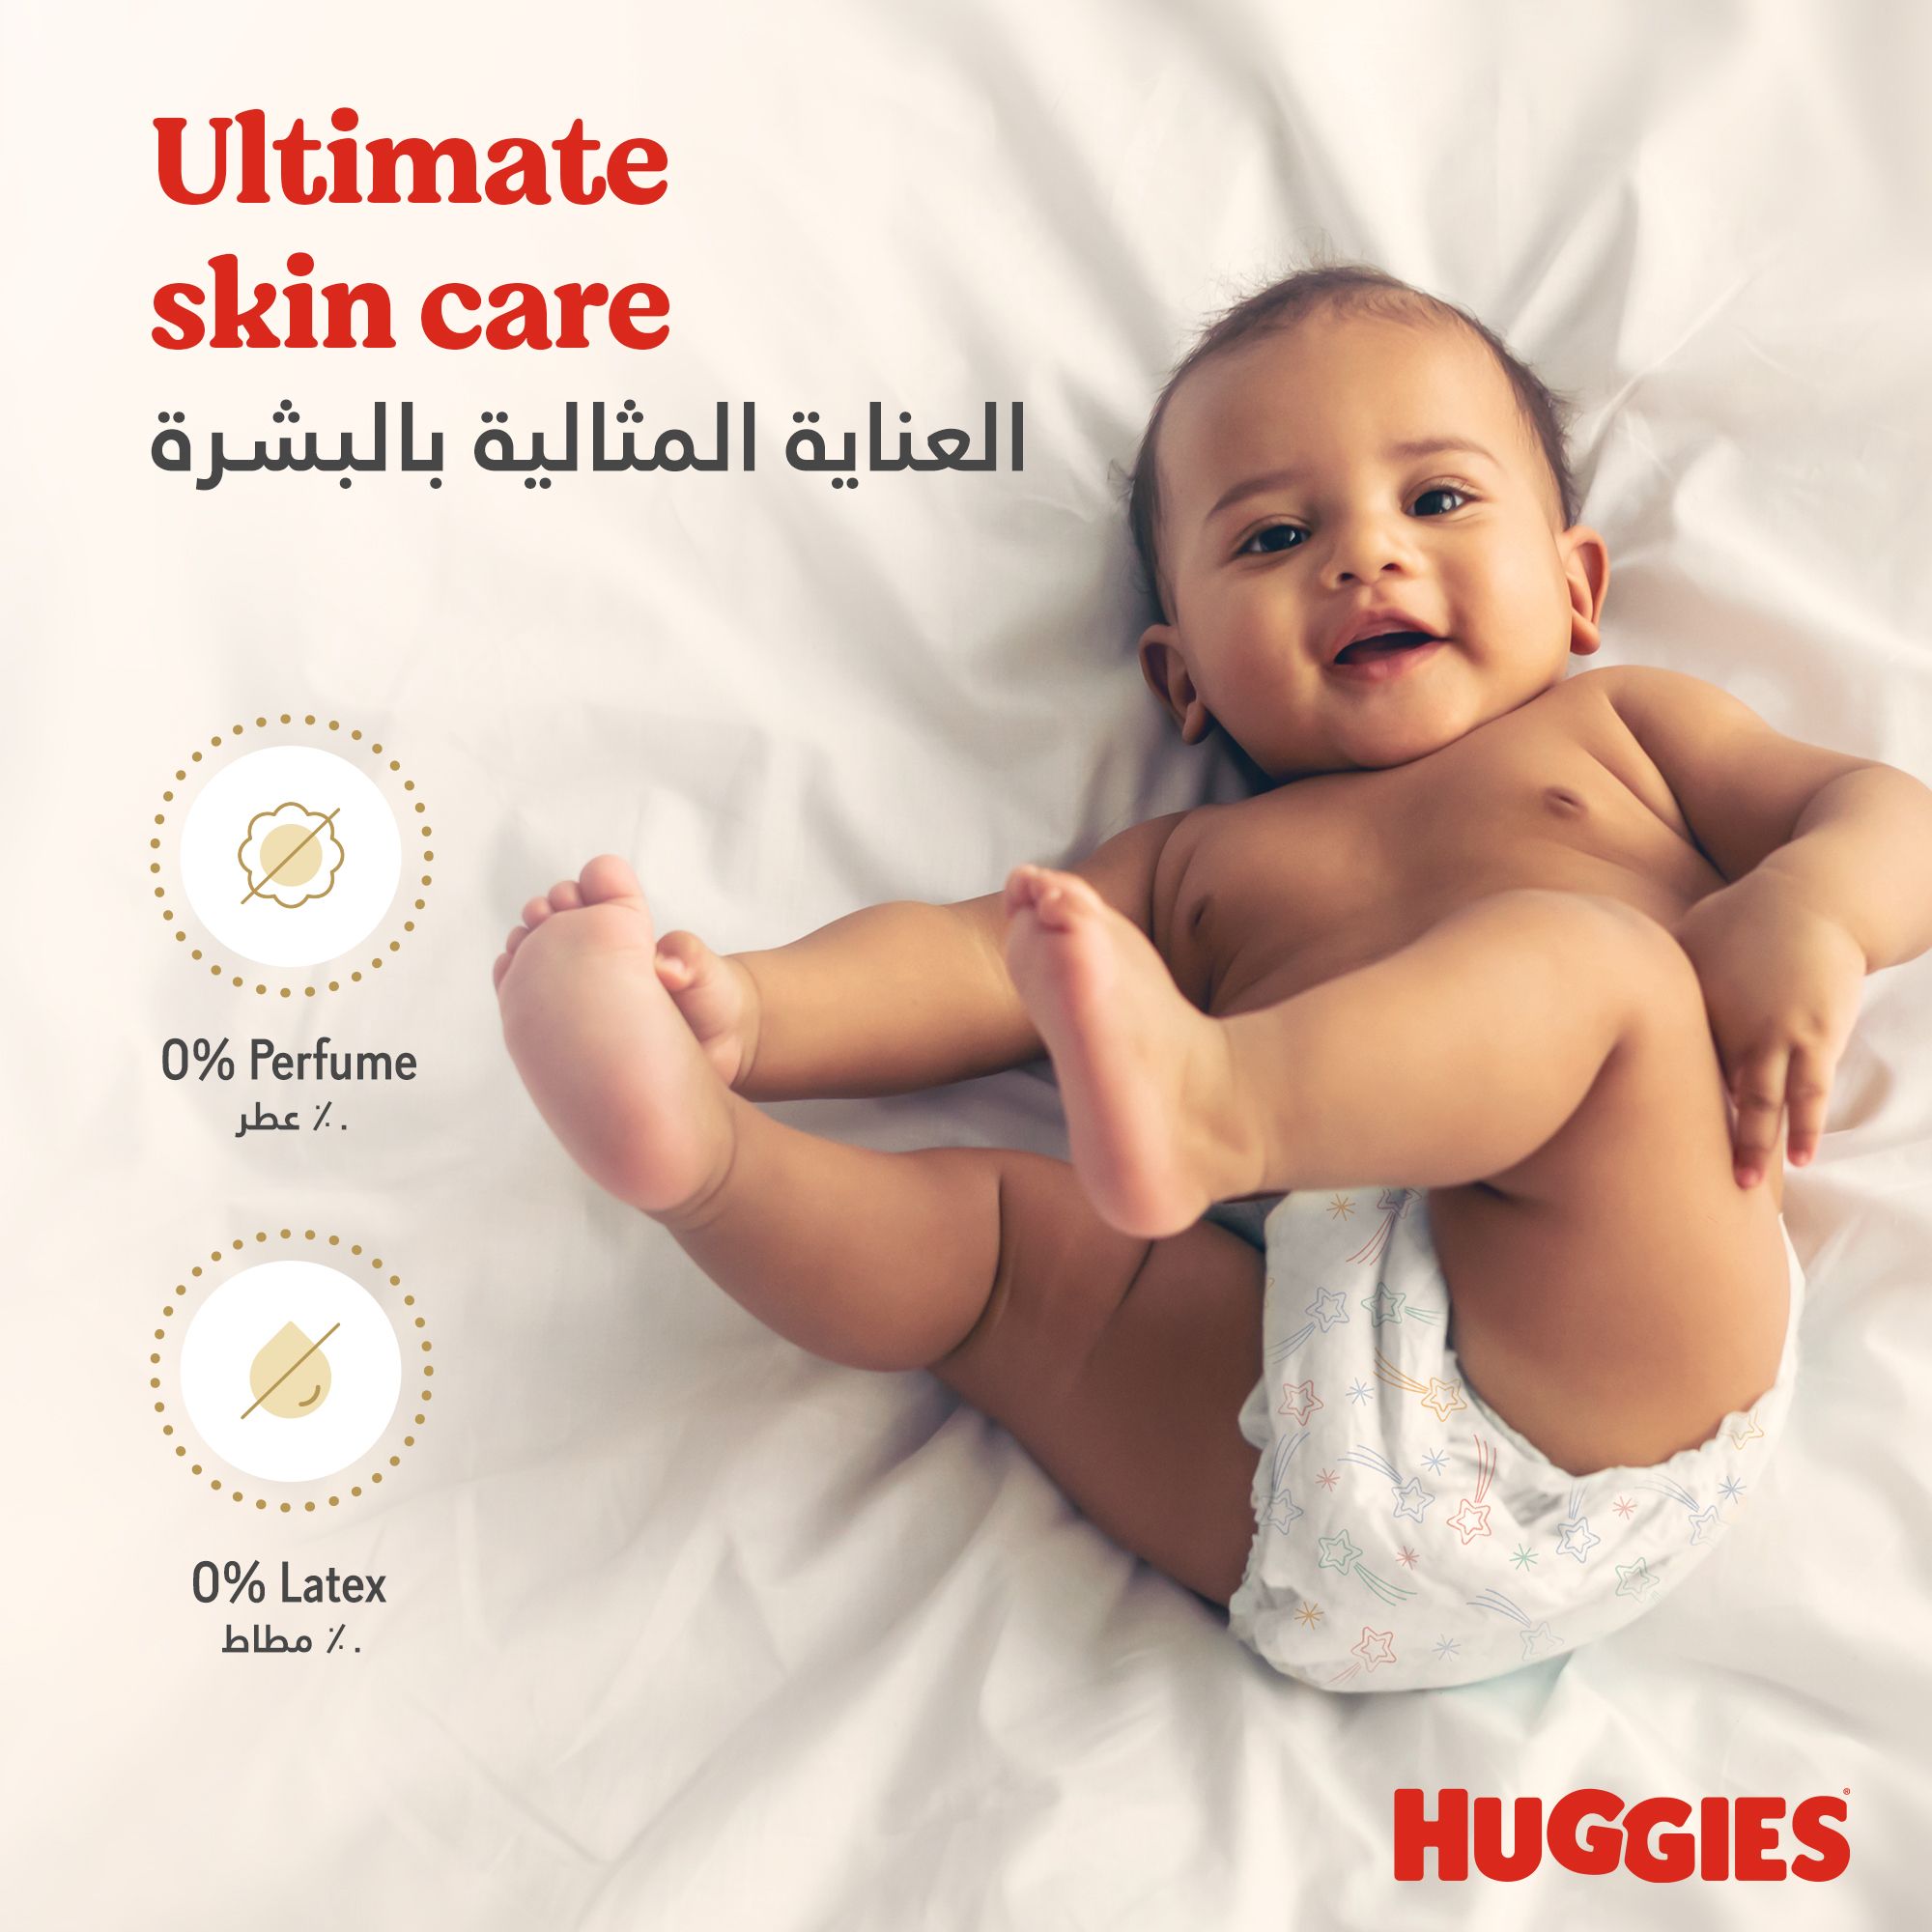 Huggies Extra Care, Size 5, 12 -22 kg, Jumbo Box, 76 Diapers